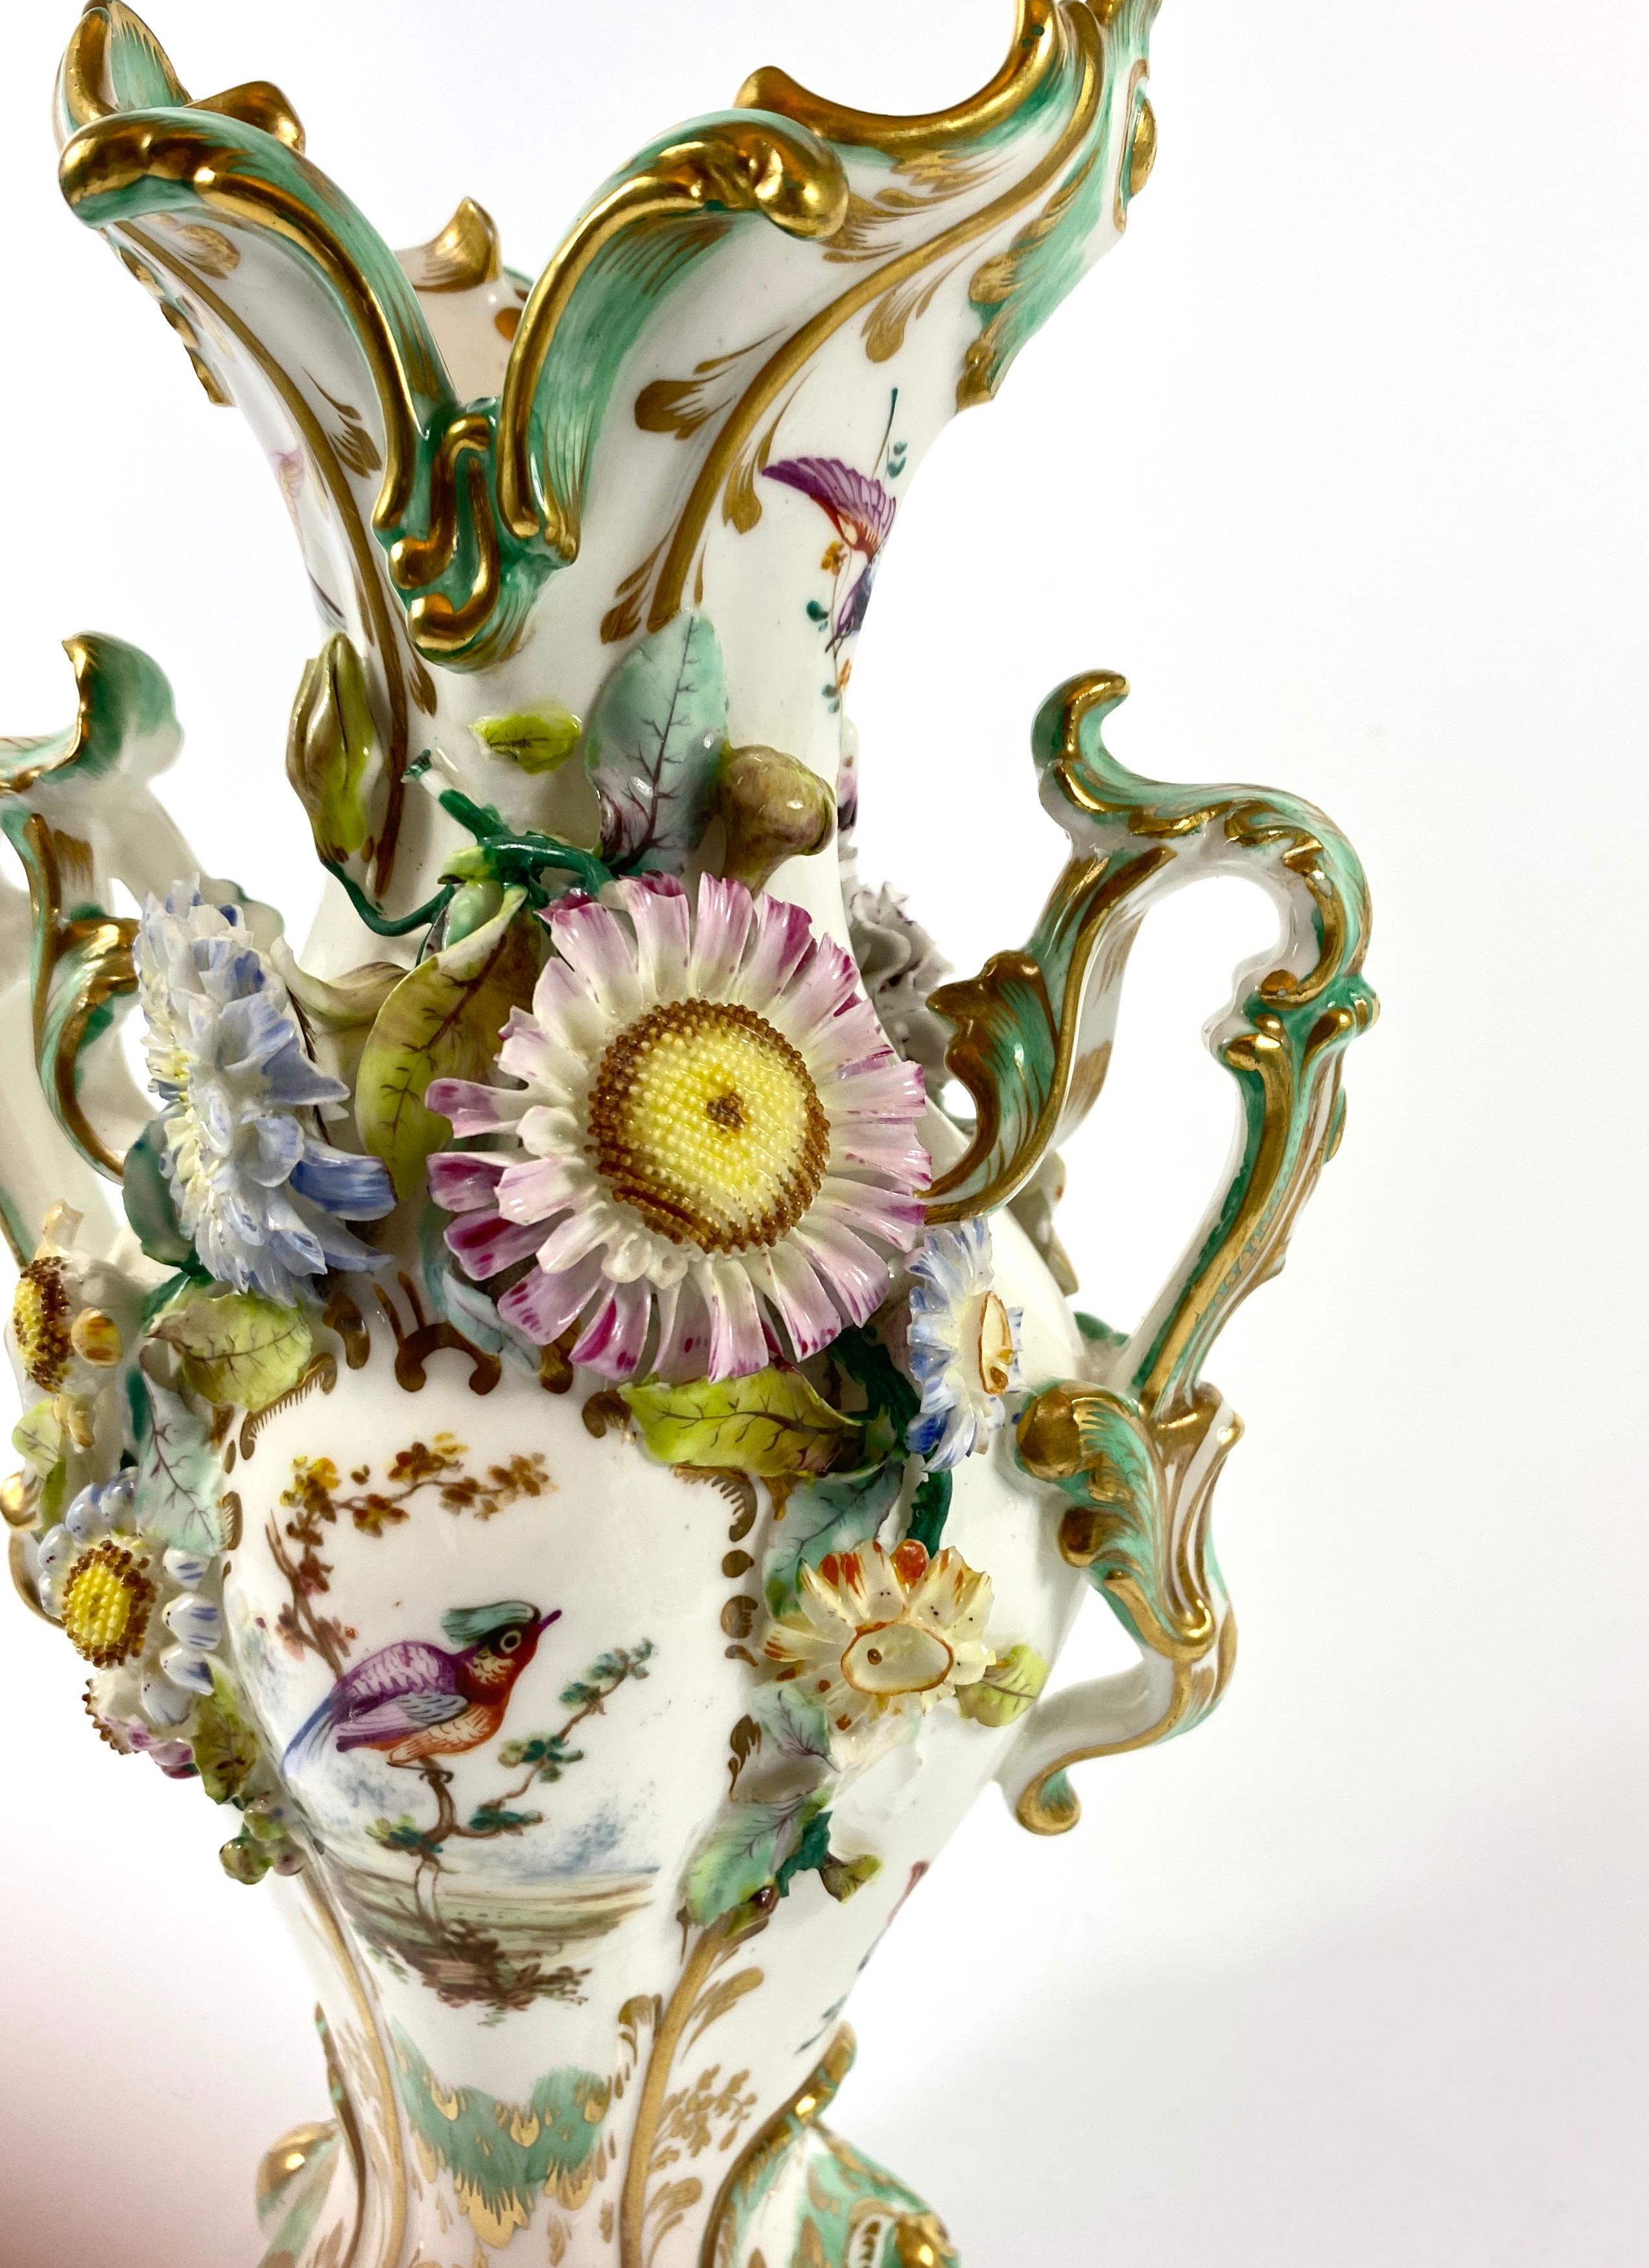 English Pair of Coalbrookdale Encrusted Porcelain Vases, circa 1830